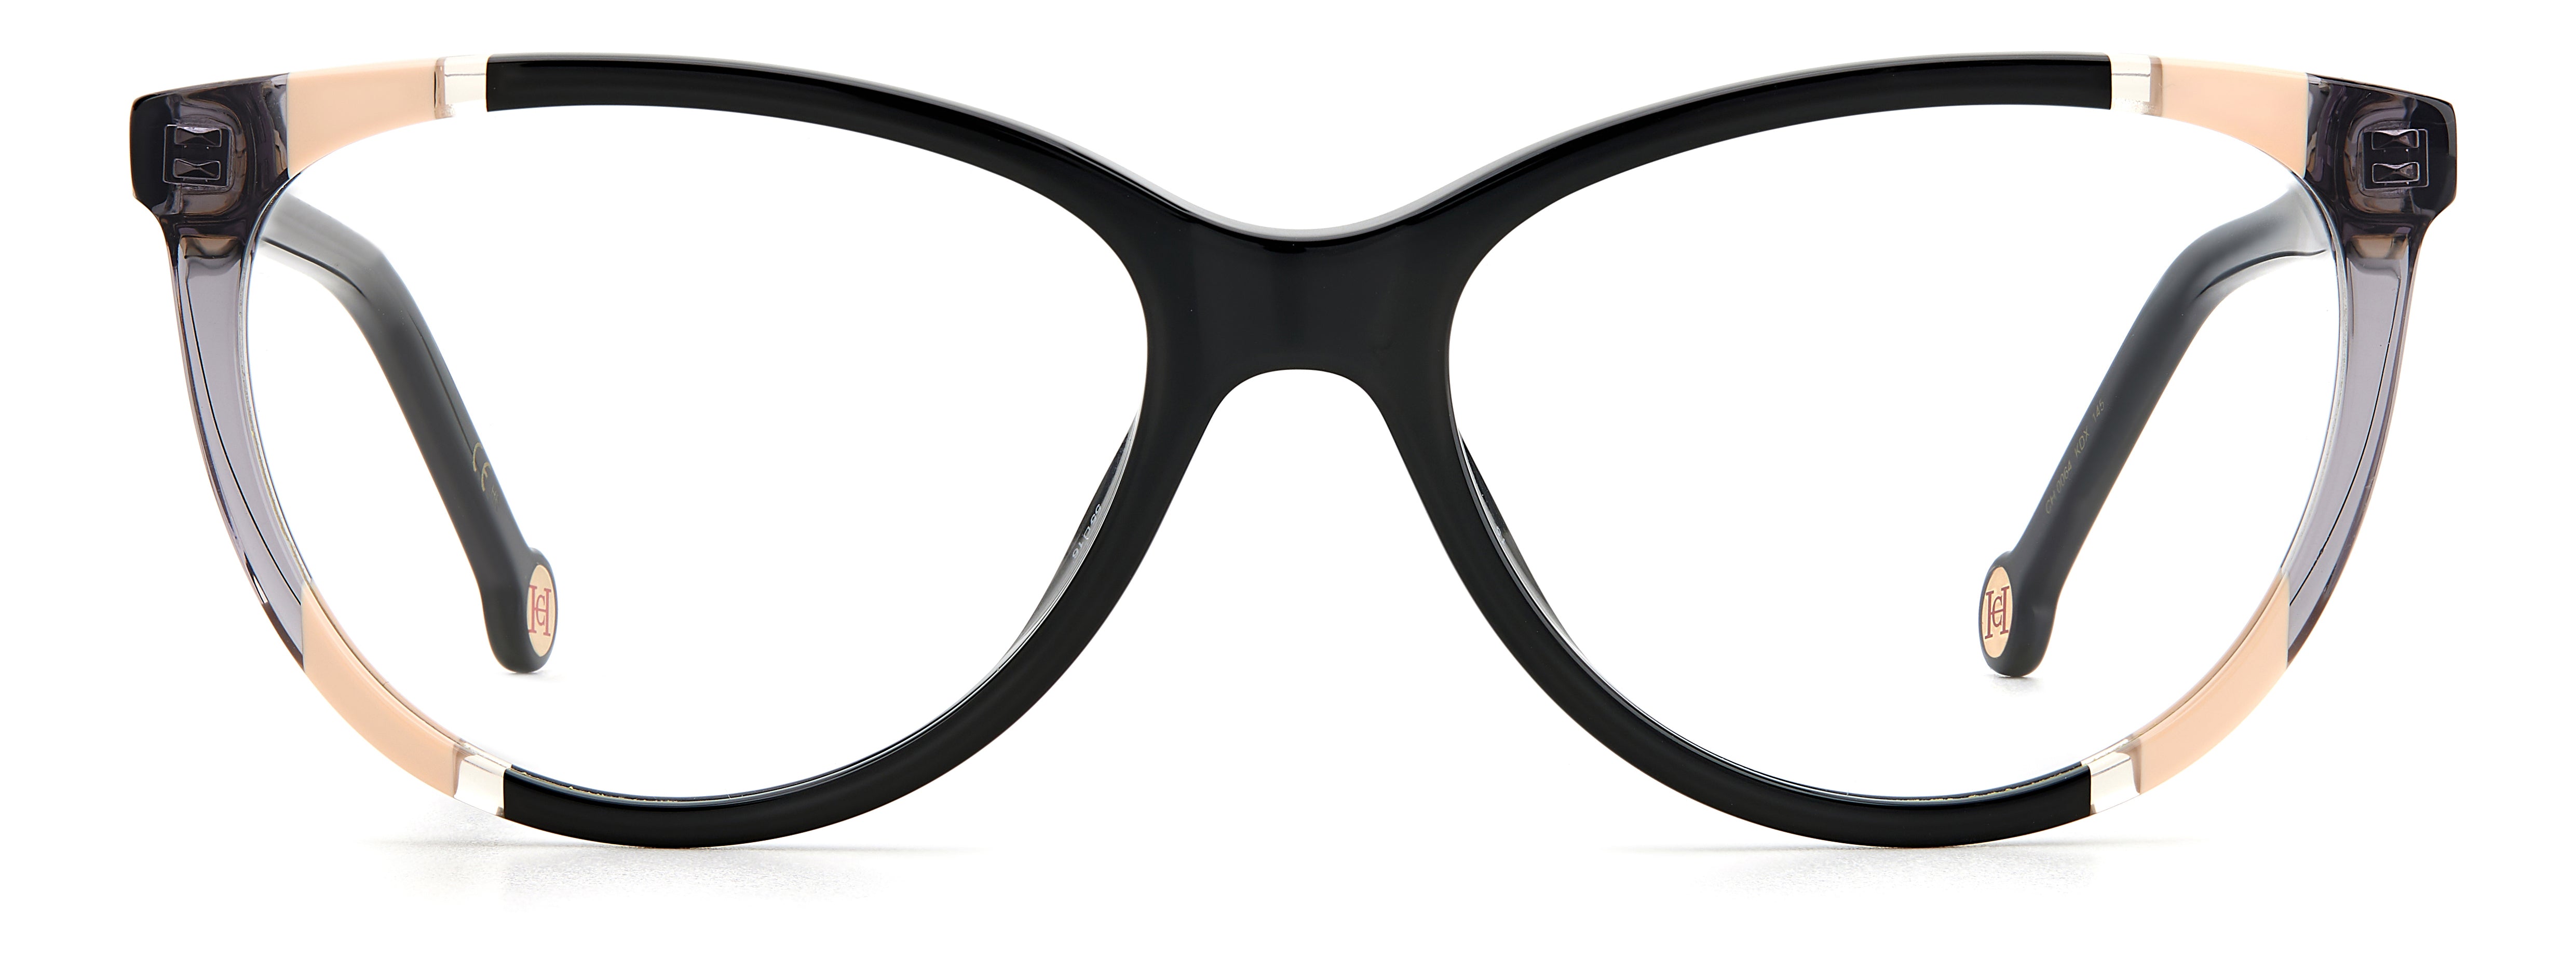 Sunglasses,specsmart, spec smart, glasses, eye glasses glasses frames, where to get glasses in lagos, eye treatment, wellness health care group, caeolina herrera CH 0064